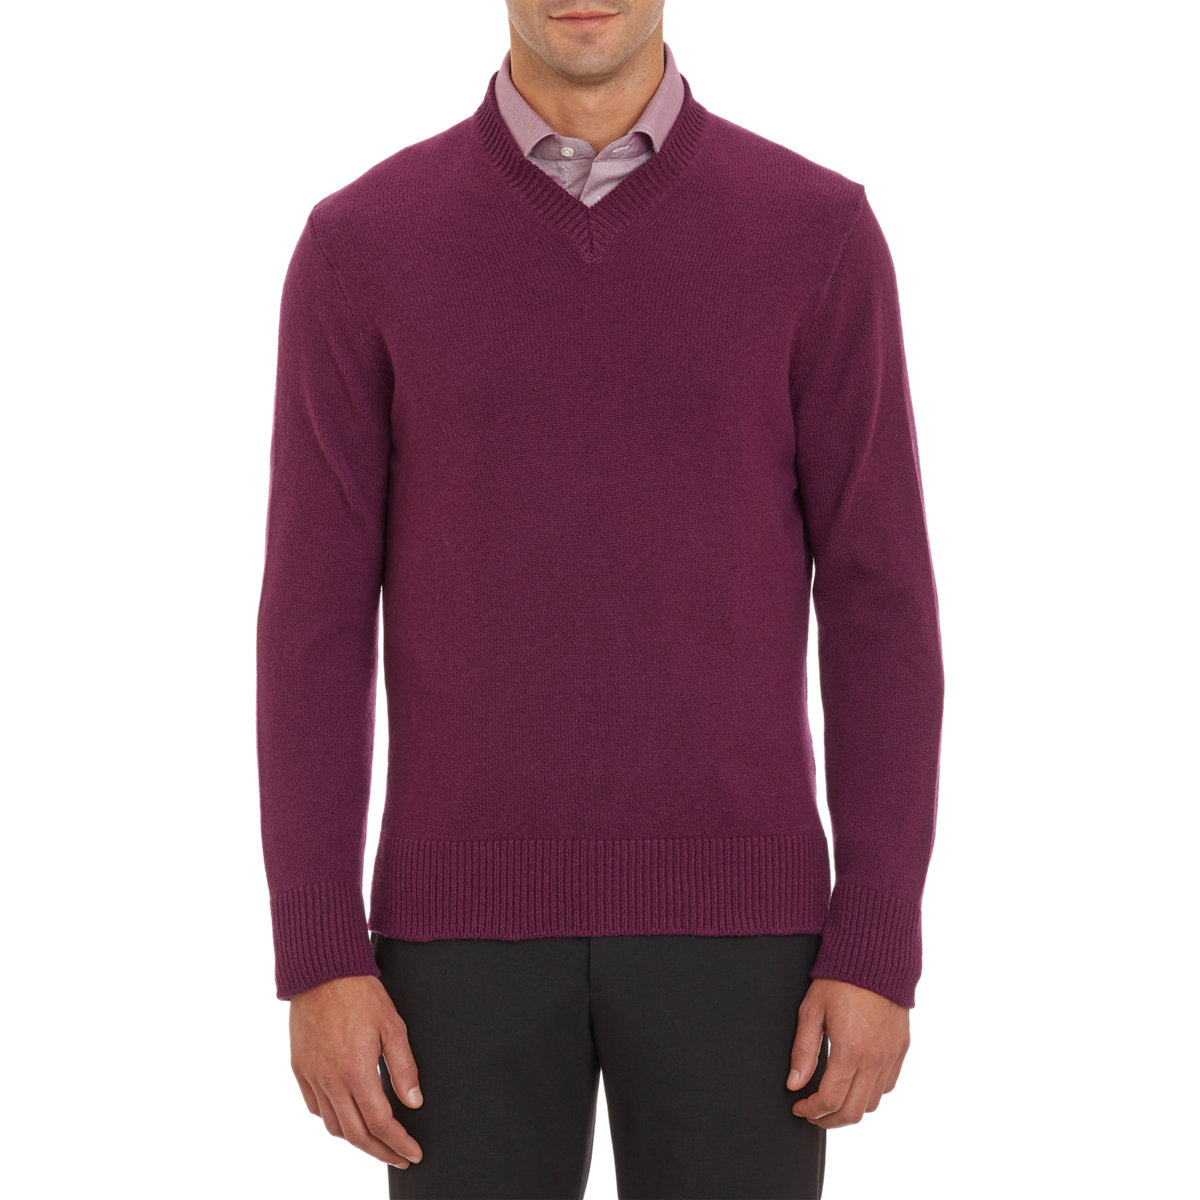 Lyst - Inis Meáin V-neck Pullover Sweater in Purple for Men